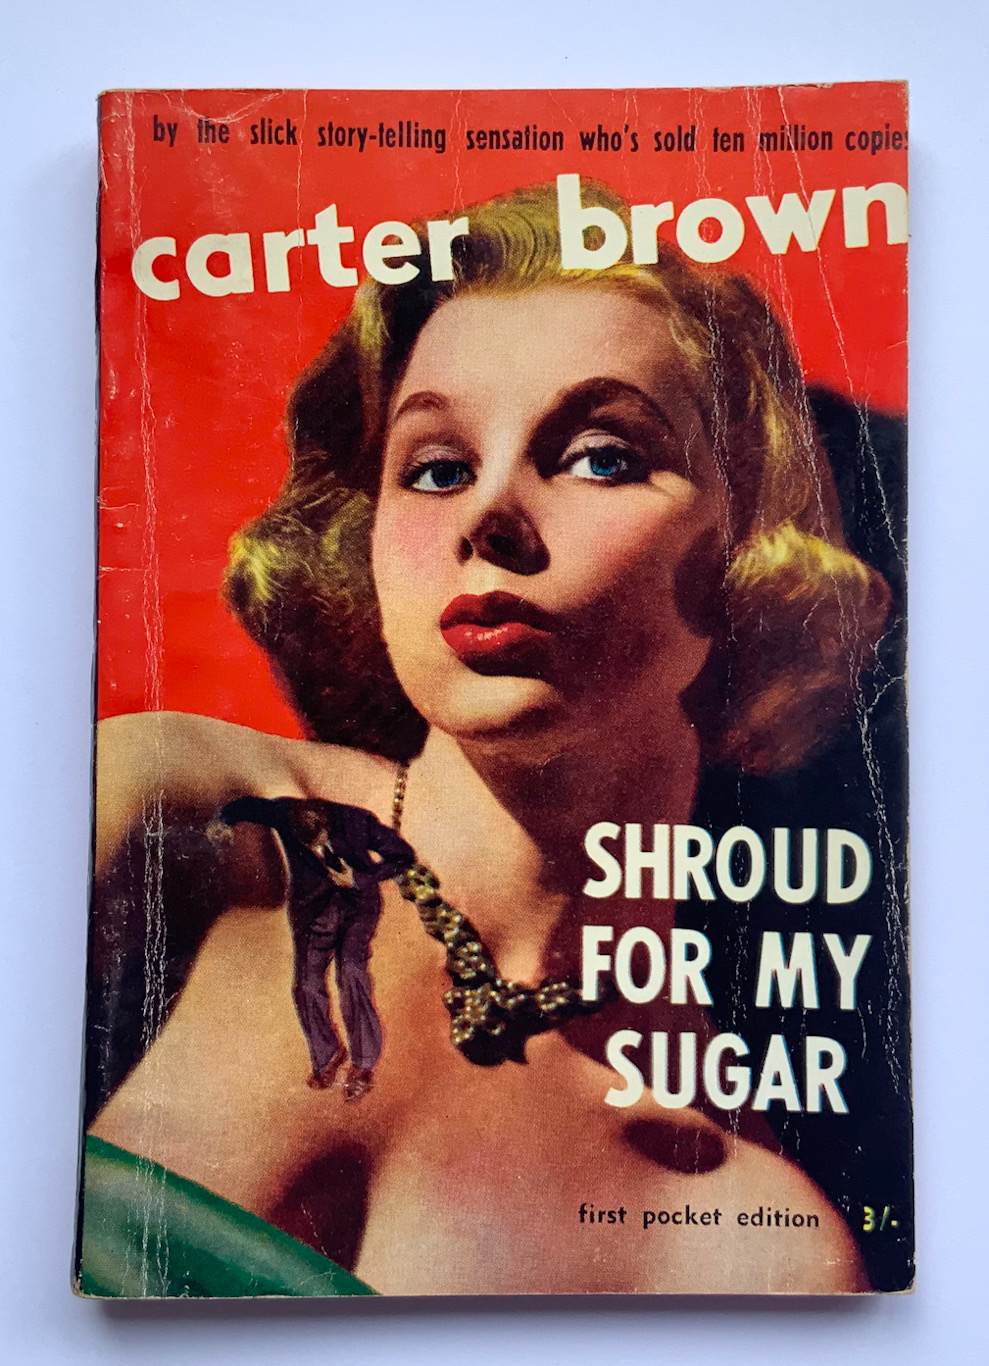 SHROUD FOR MY SUGAR Australian crime pulp fiction book by Carter Brown 1955